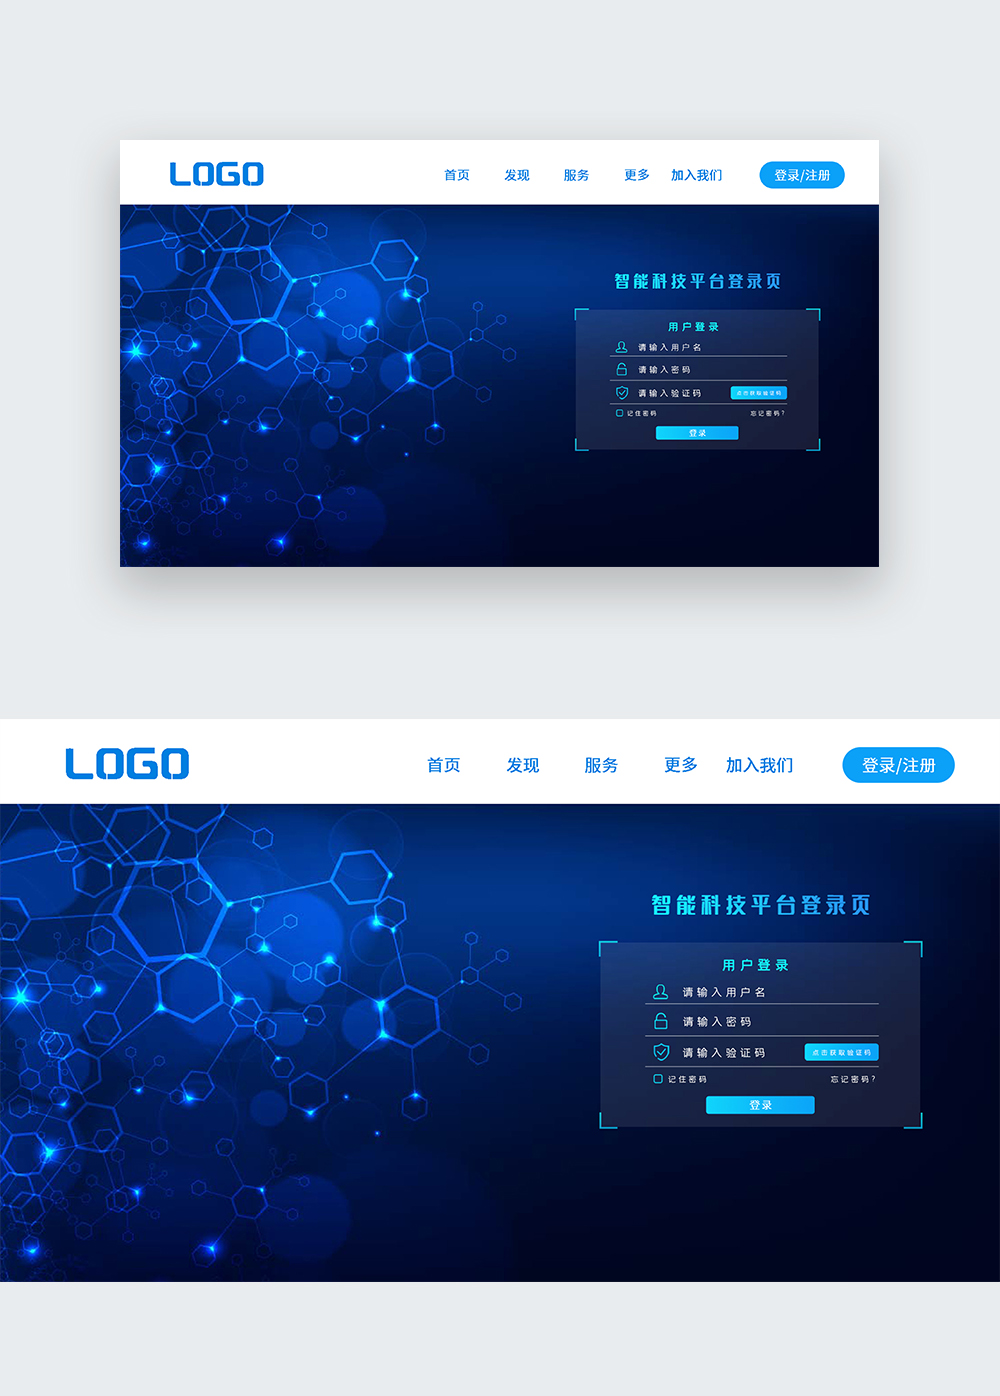 Ui Design Web side Technology Sense Login Page Template Image picture 